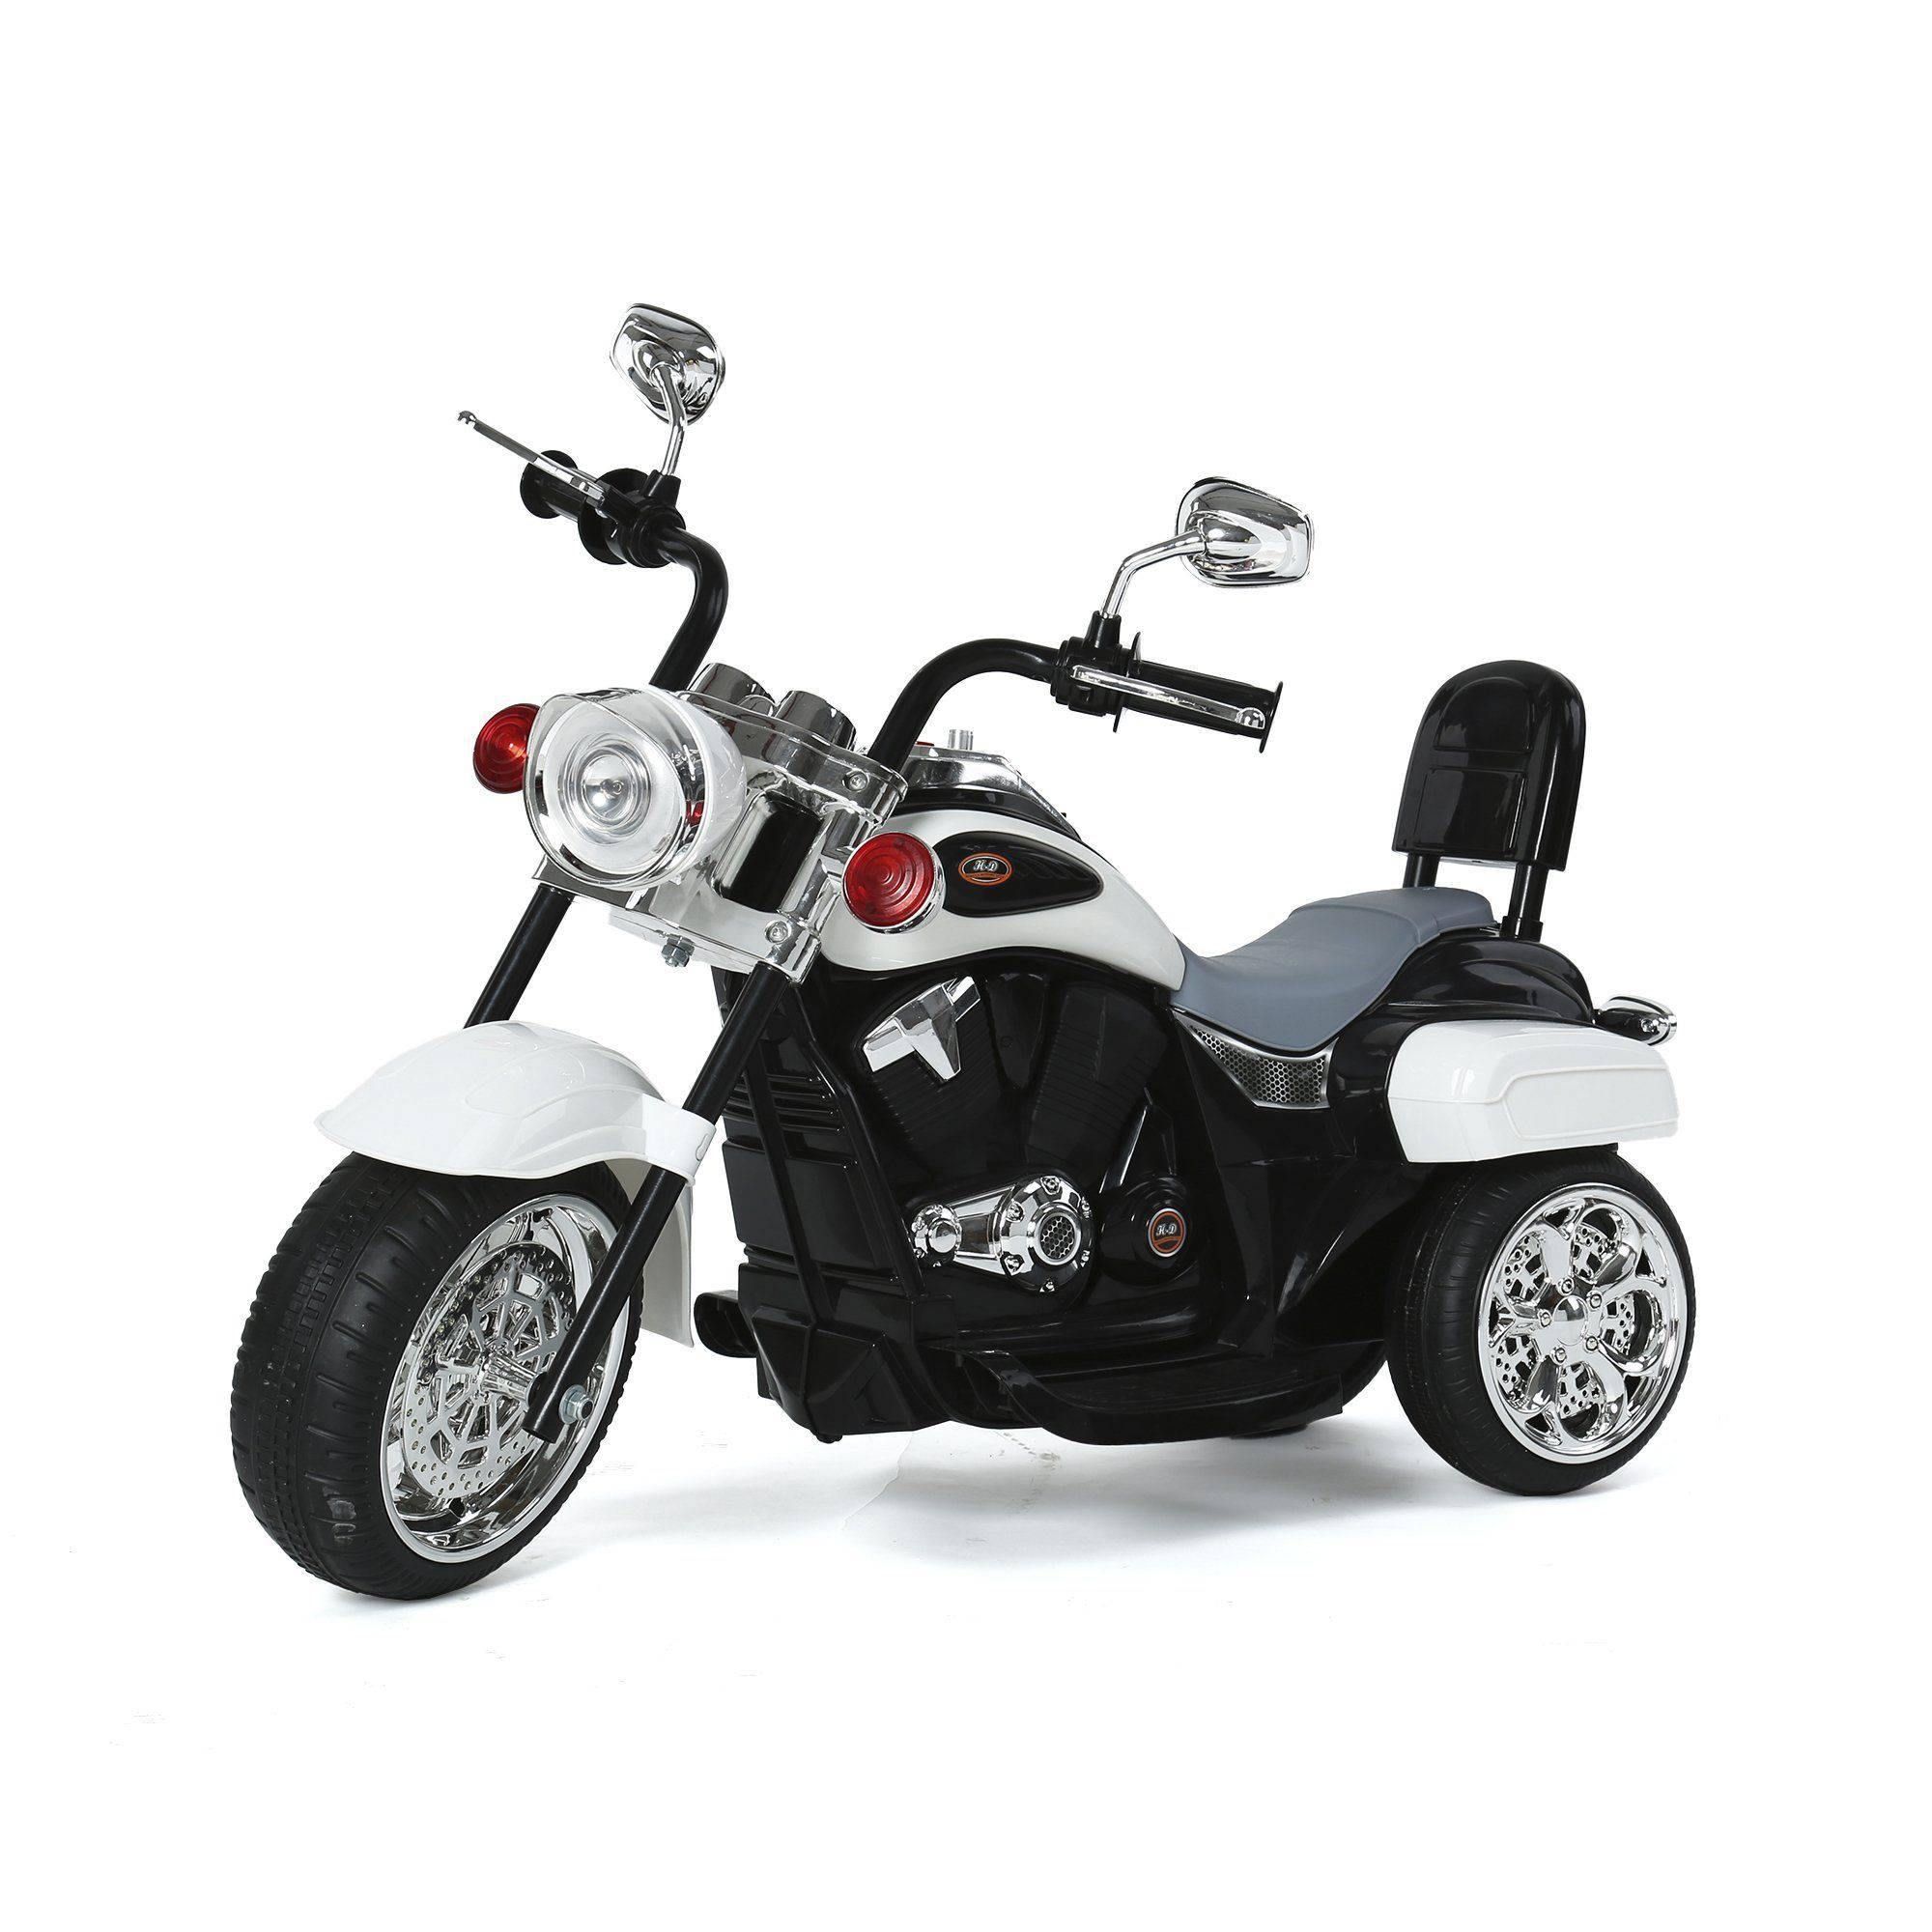 6V Freddo Toys Chopper Style Ride on Trike Kids Cars CA - Ride On Toys Store